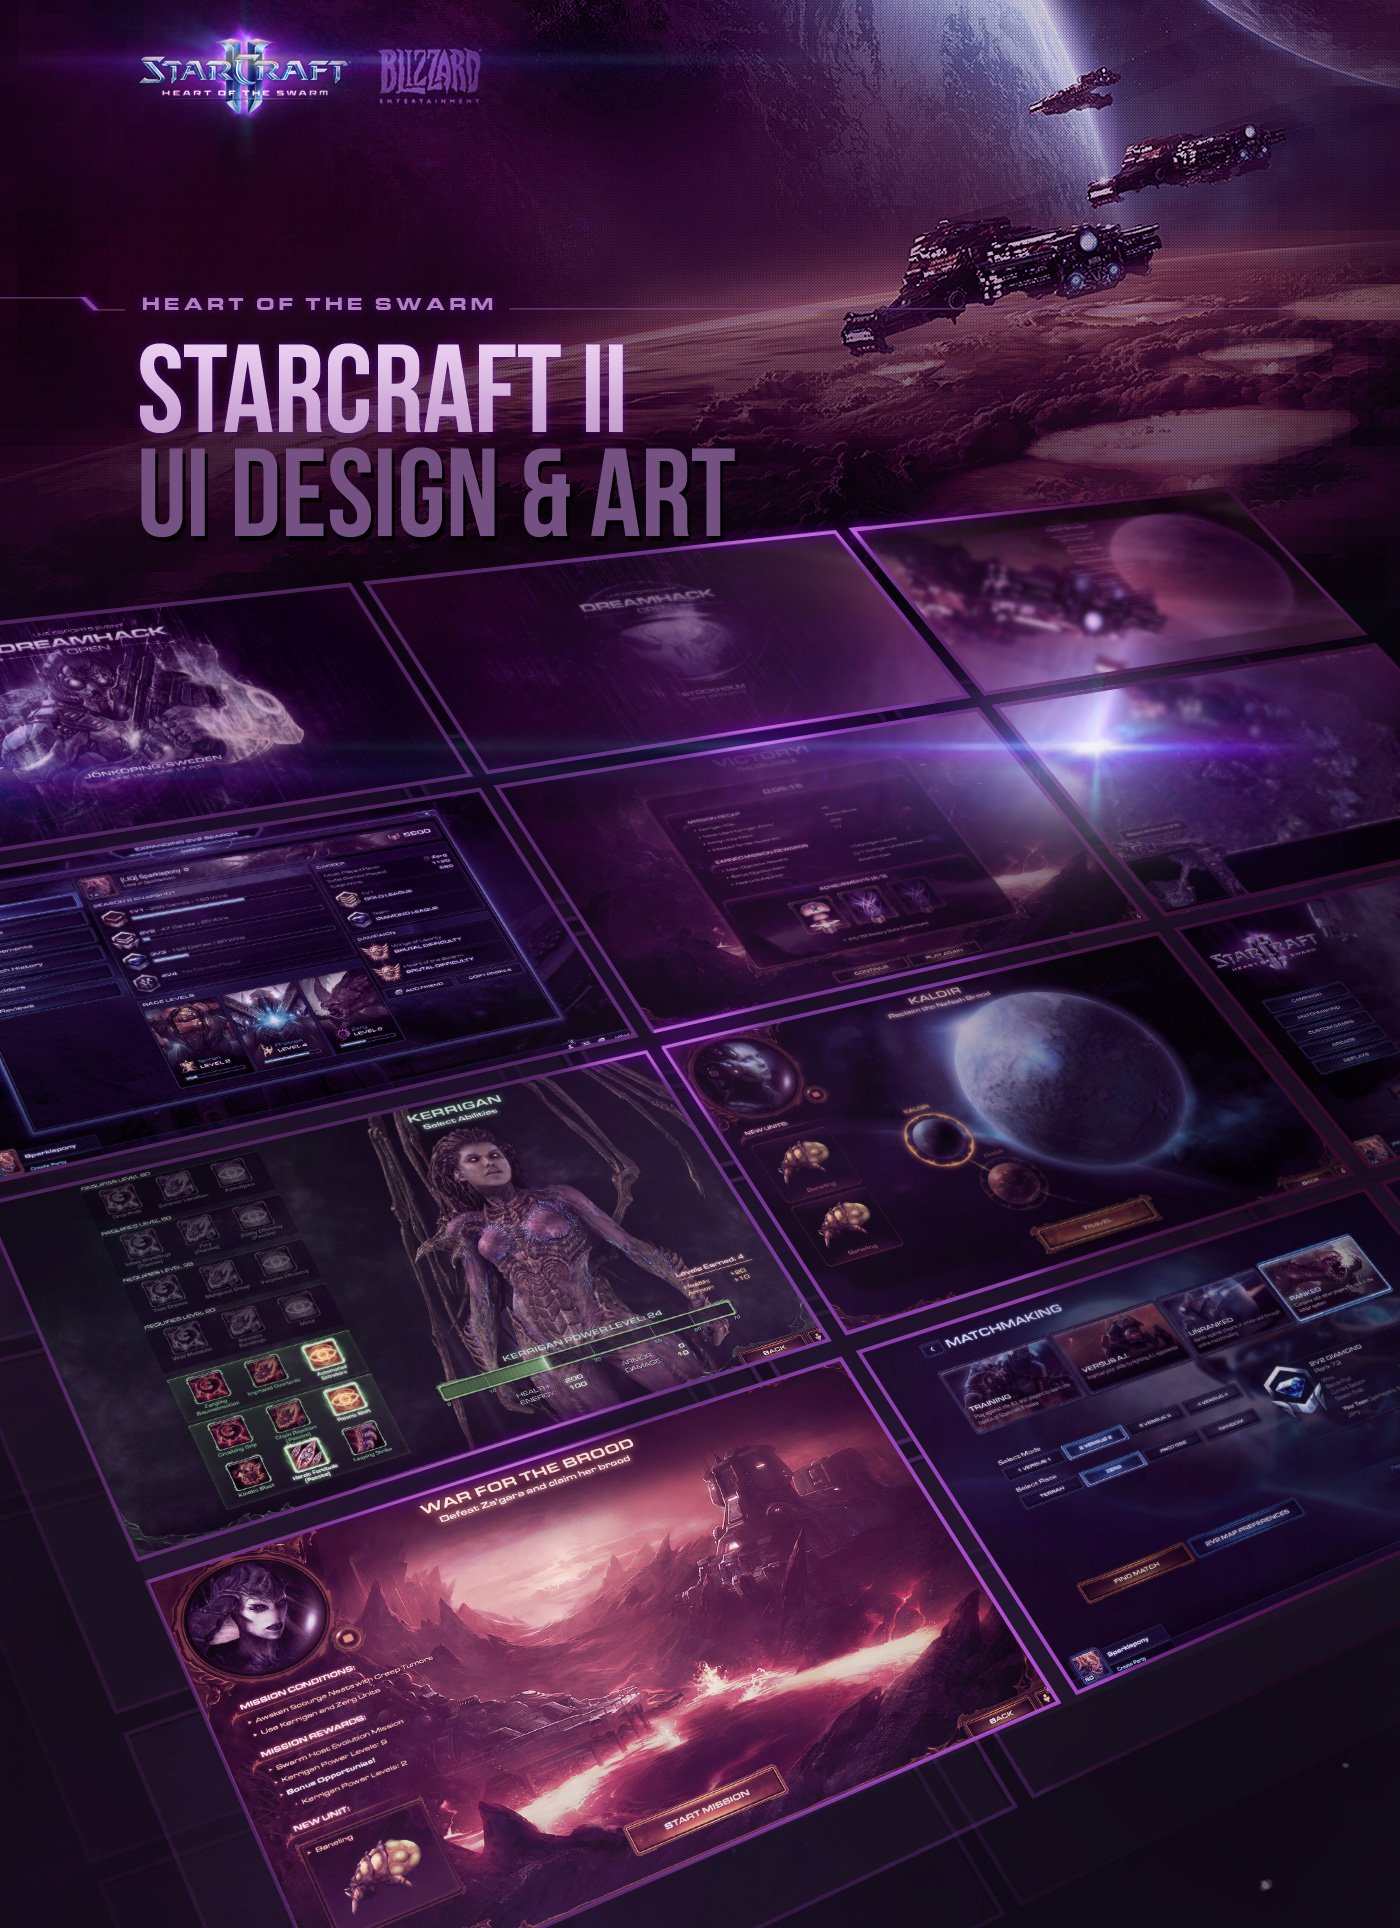 Blizzard blizzard entertainment starcraft StarCraft II Starcraft 2 swarm kerrigan Game Art ui design UI ux design